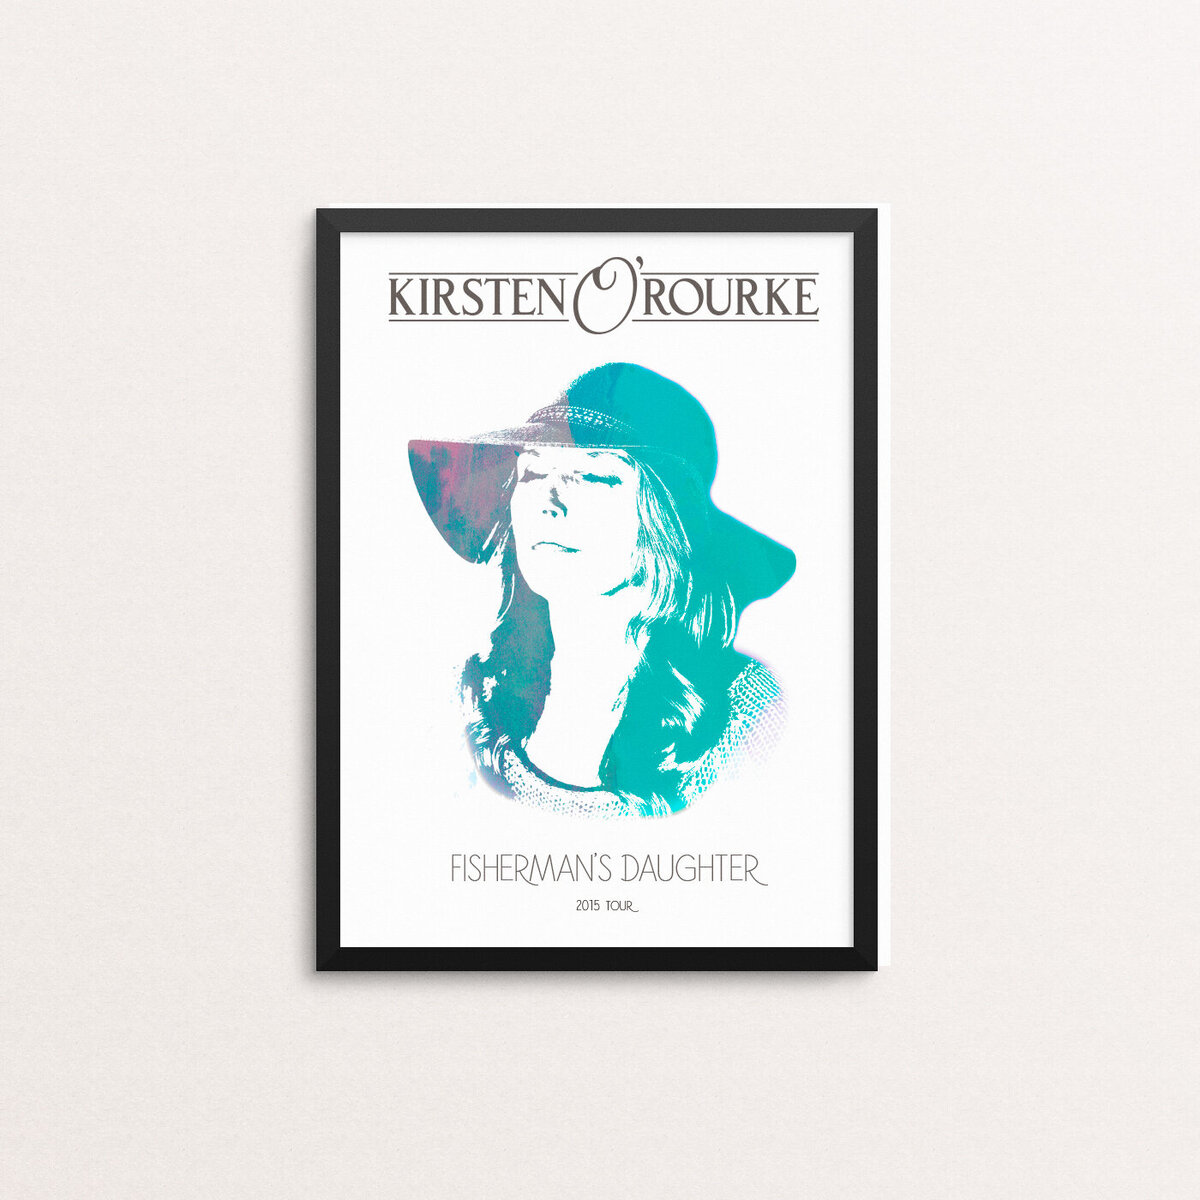 KirstenO_poster